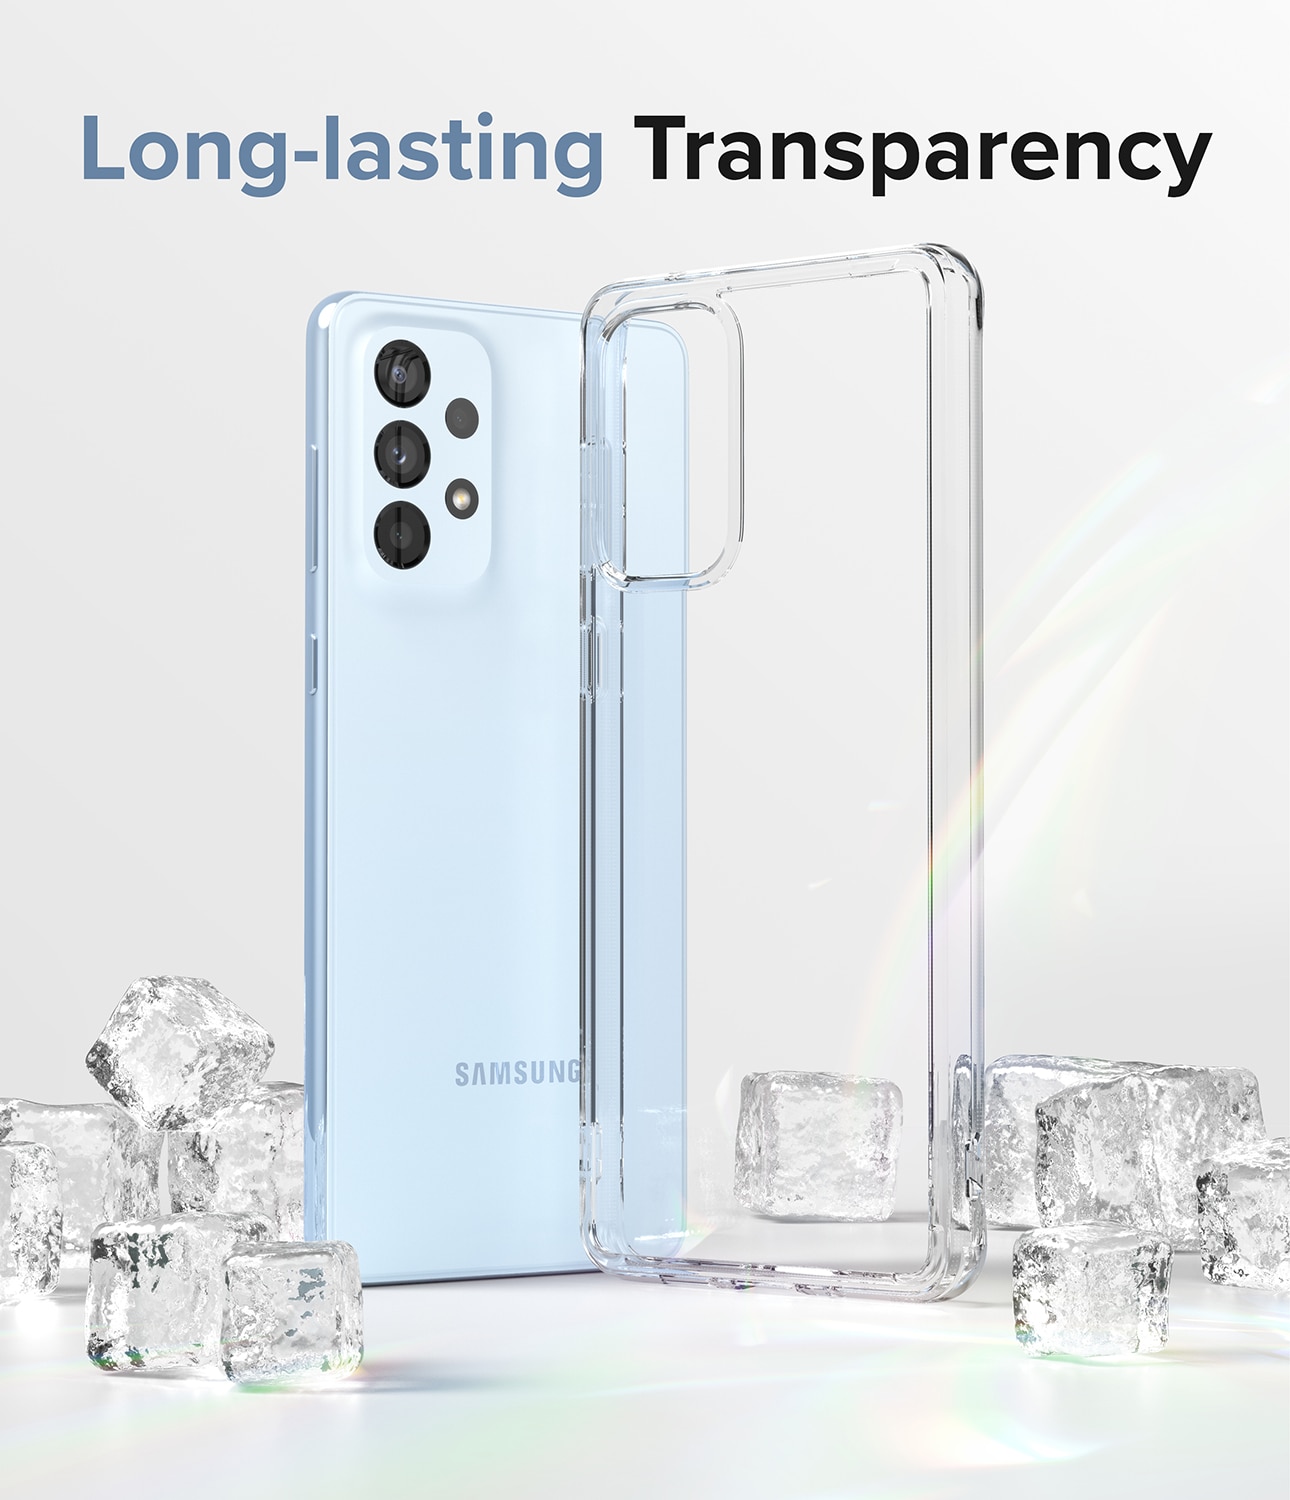 Cover Fusion Samsung Galaxy A53 Clear